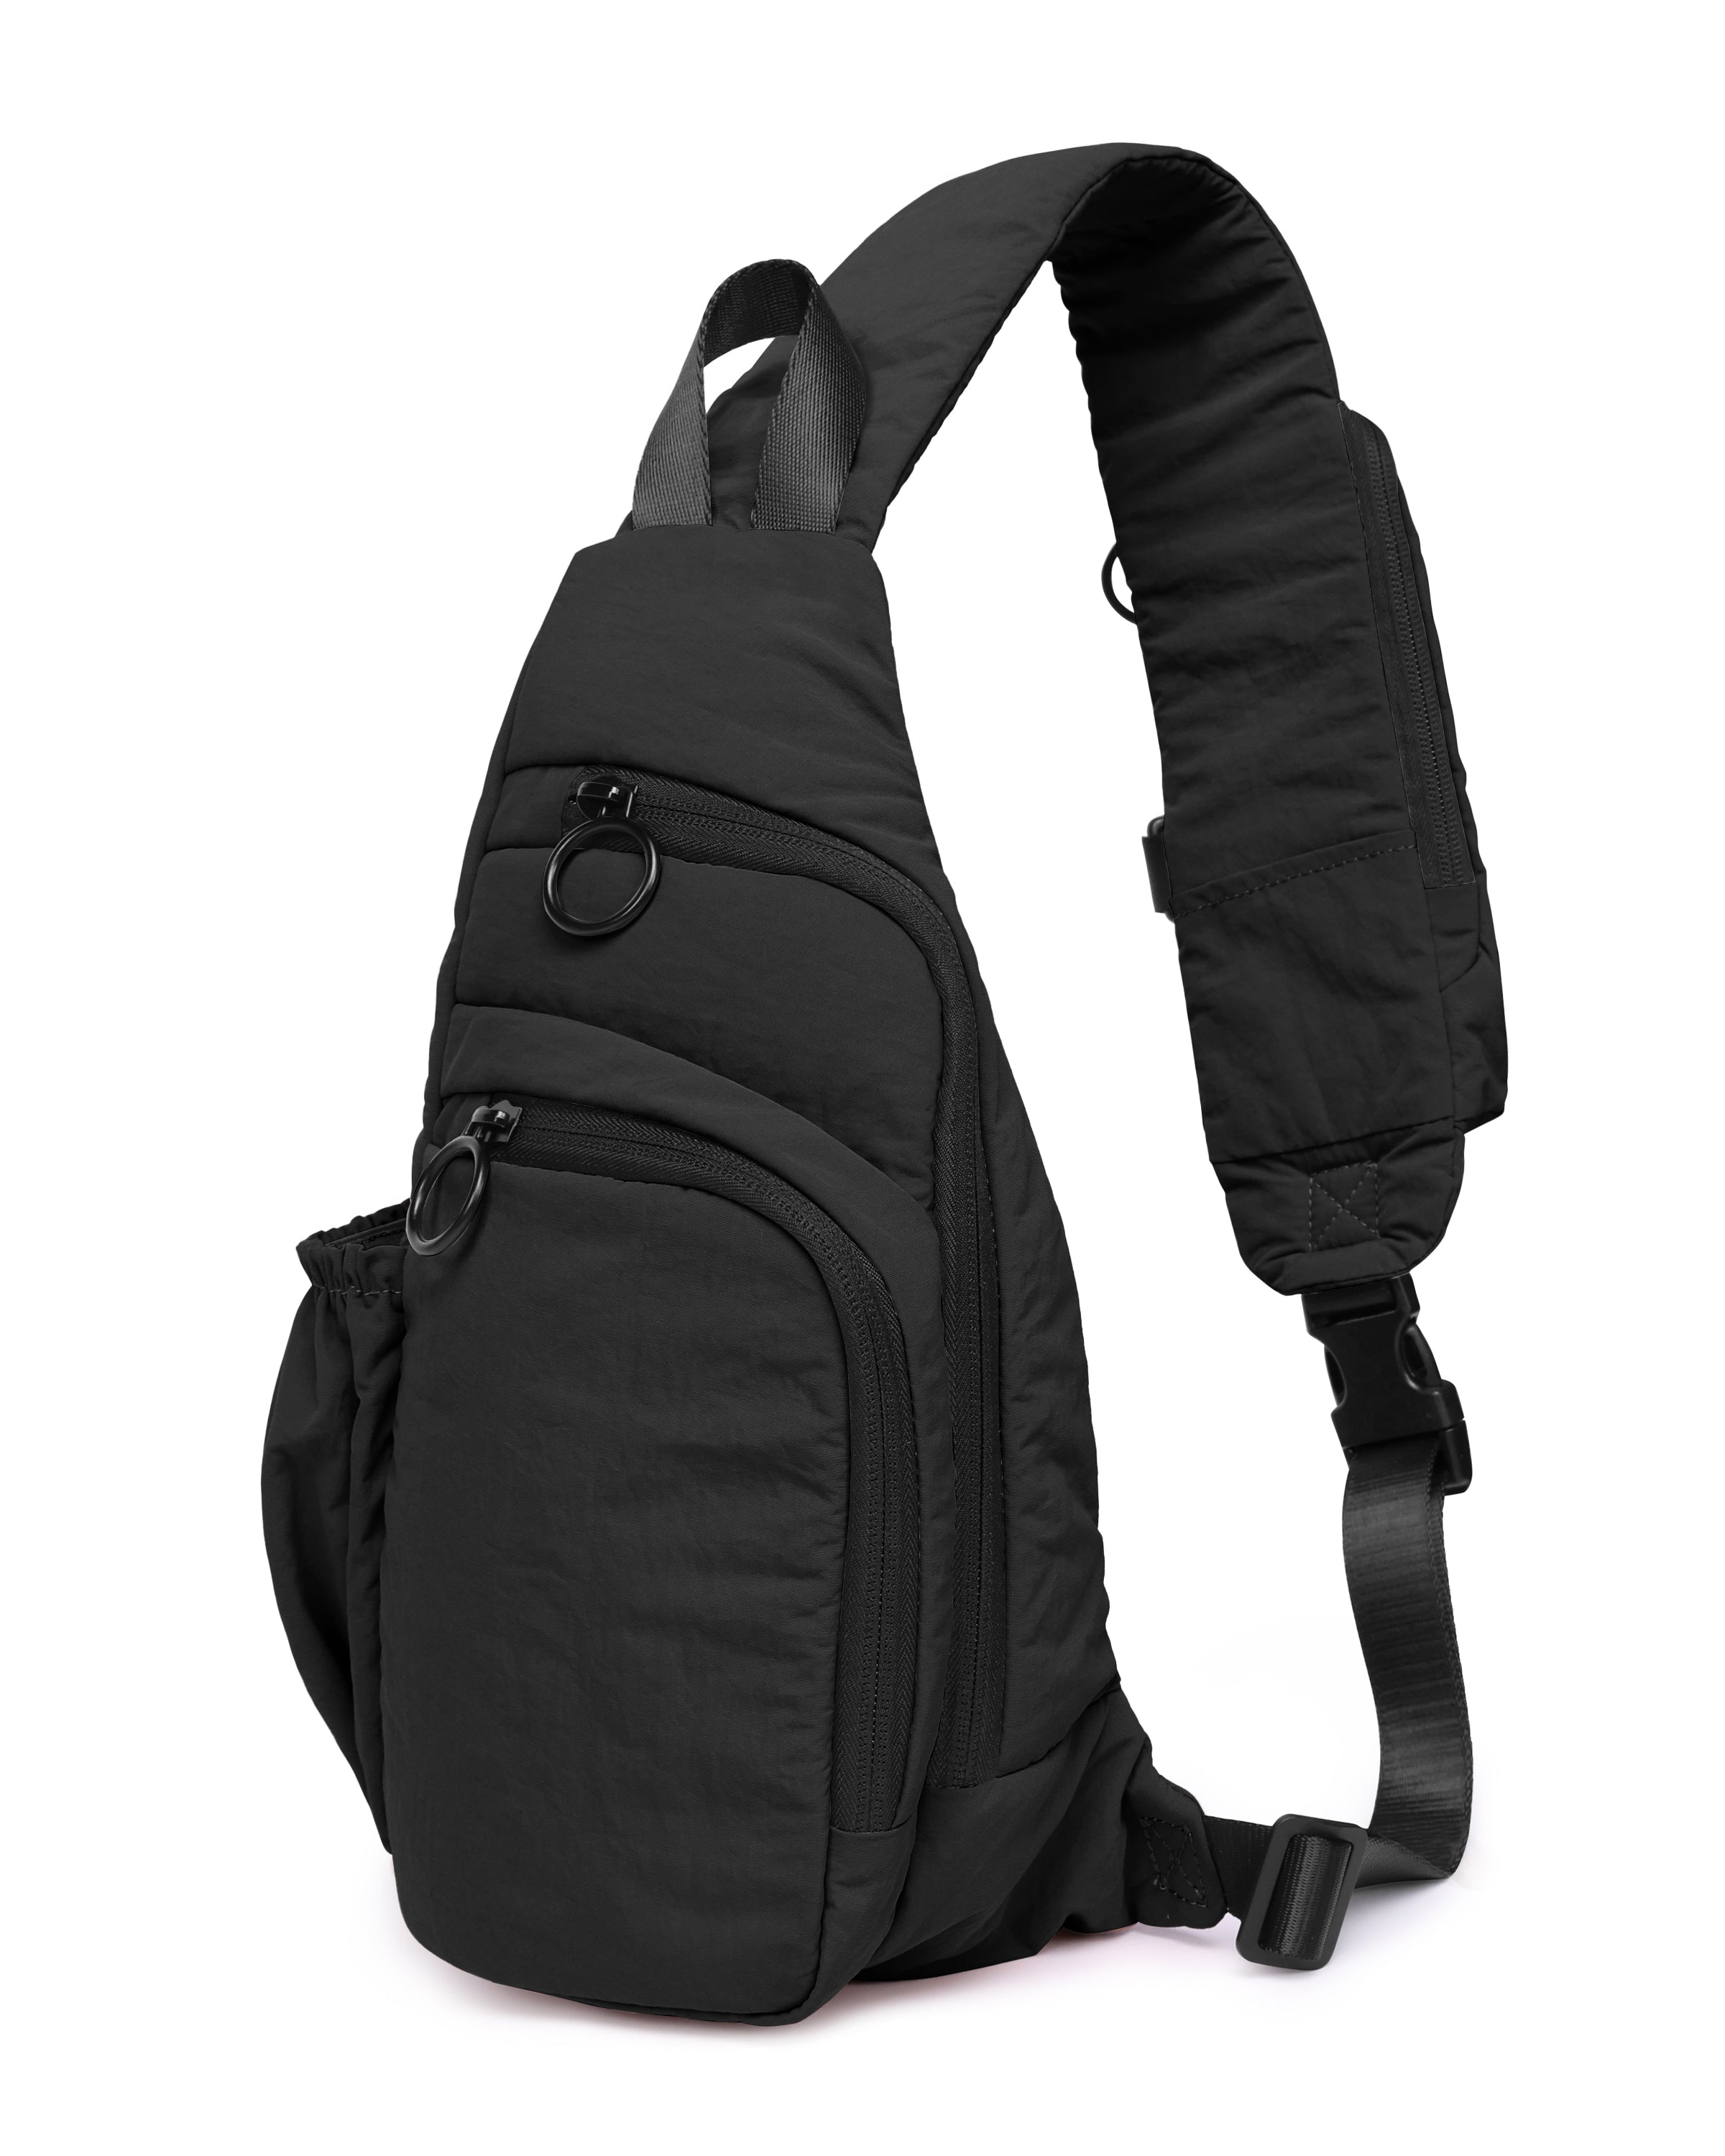 Crossbody Lightweight Sling Bag Black - ododos